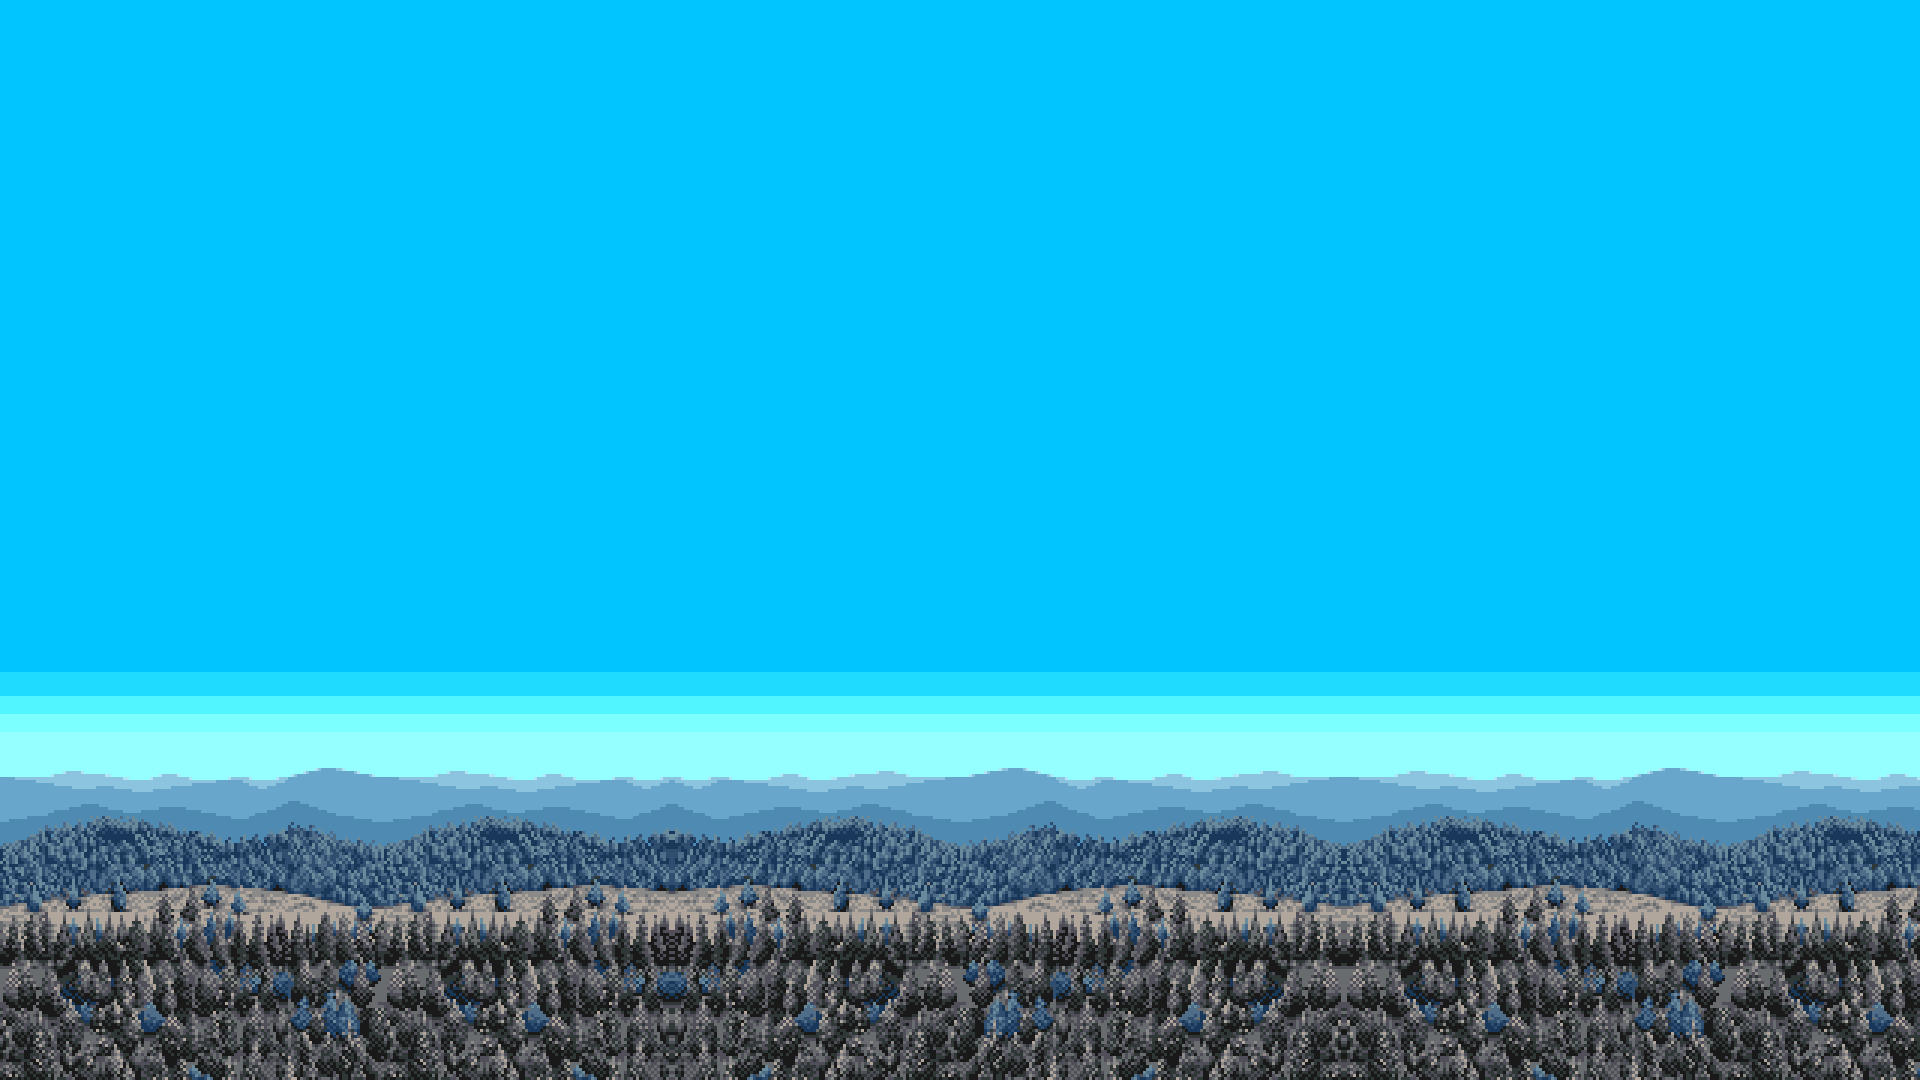 General 1920x1080 pixelated cyan pixels pixel art minimalism trees forest turquoise background digital art sky landscape